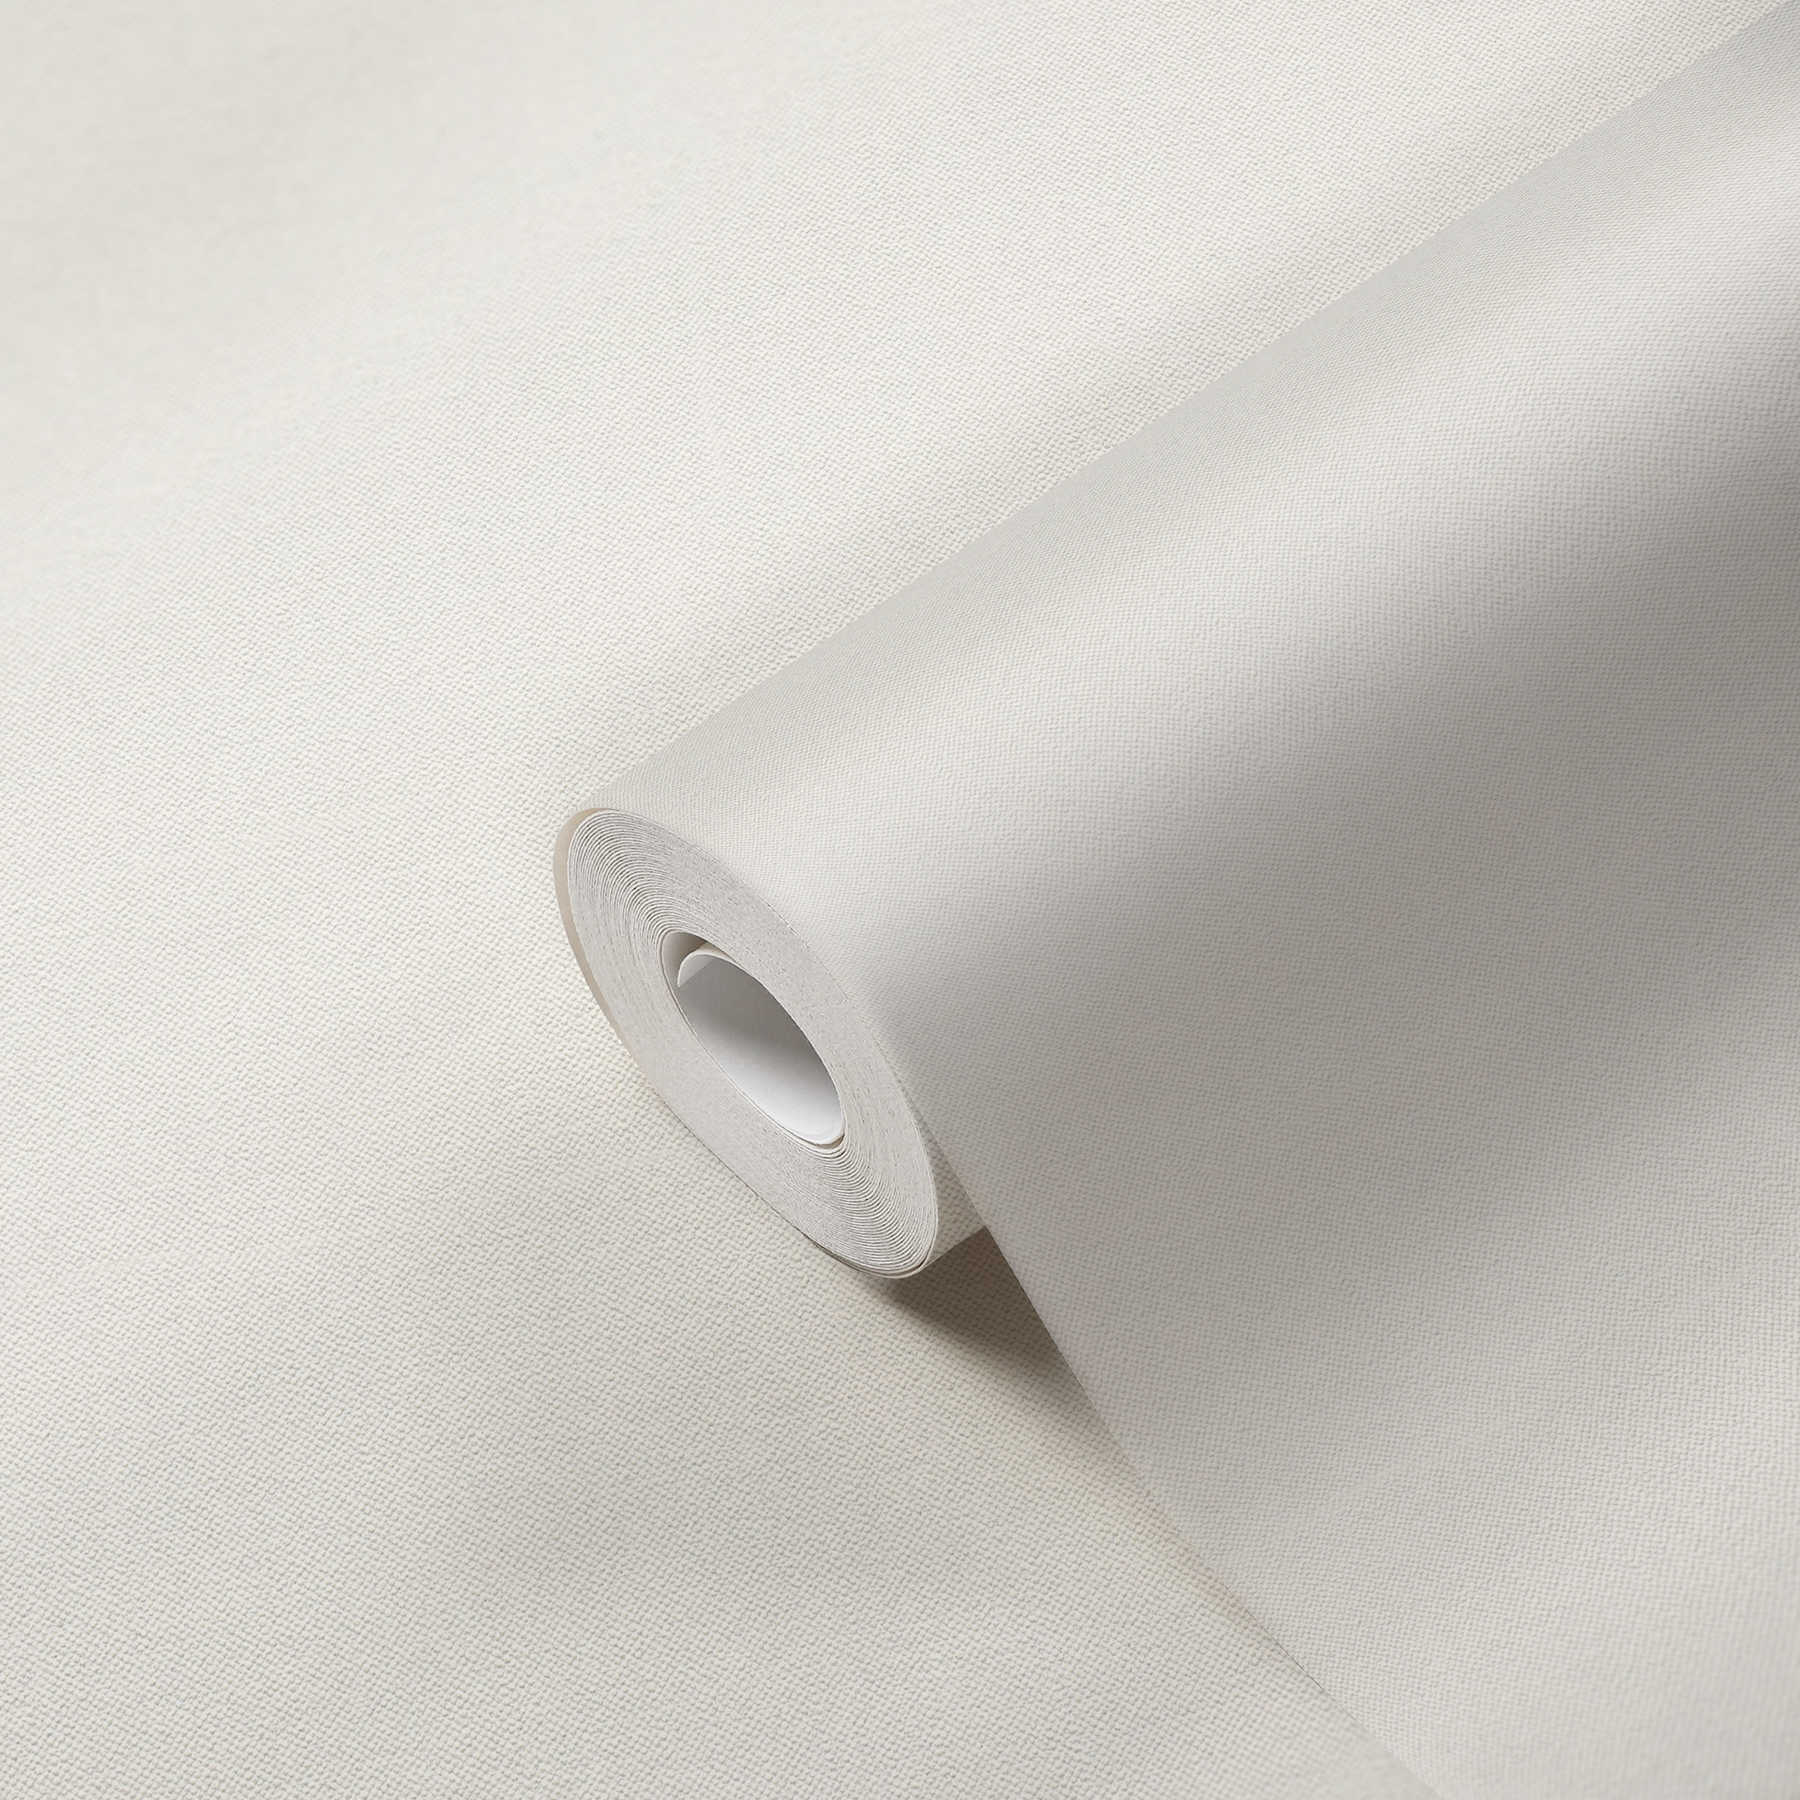             Linen optics wallpaper white with silver glitter effect & structure design
        